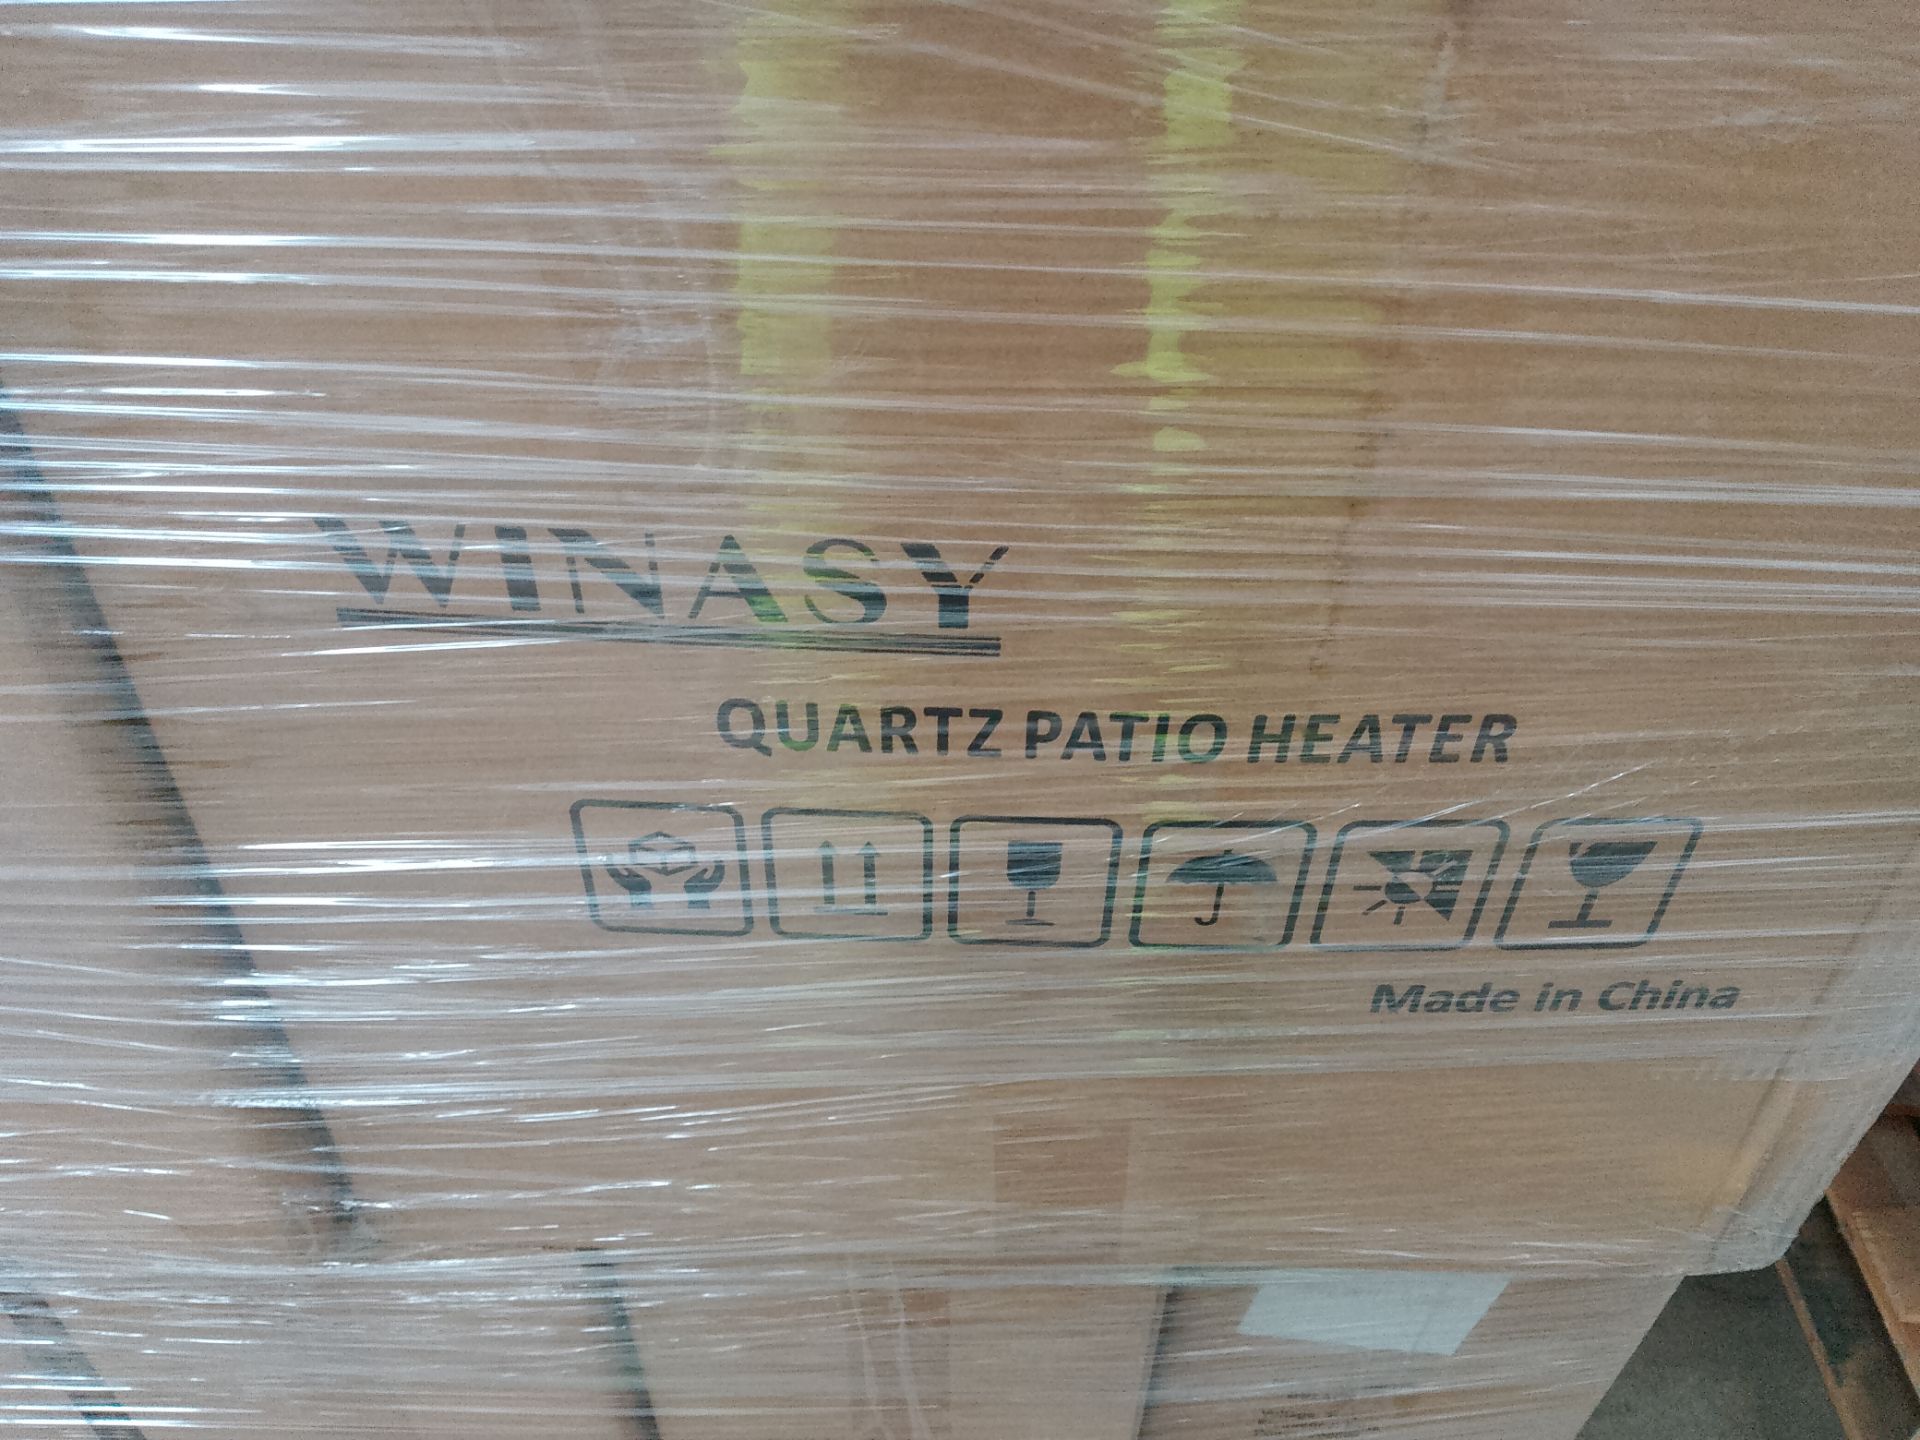 24 X New Winasy Quartz Patio Heater - Image 2 of 4